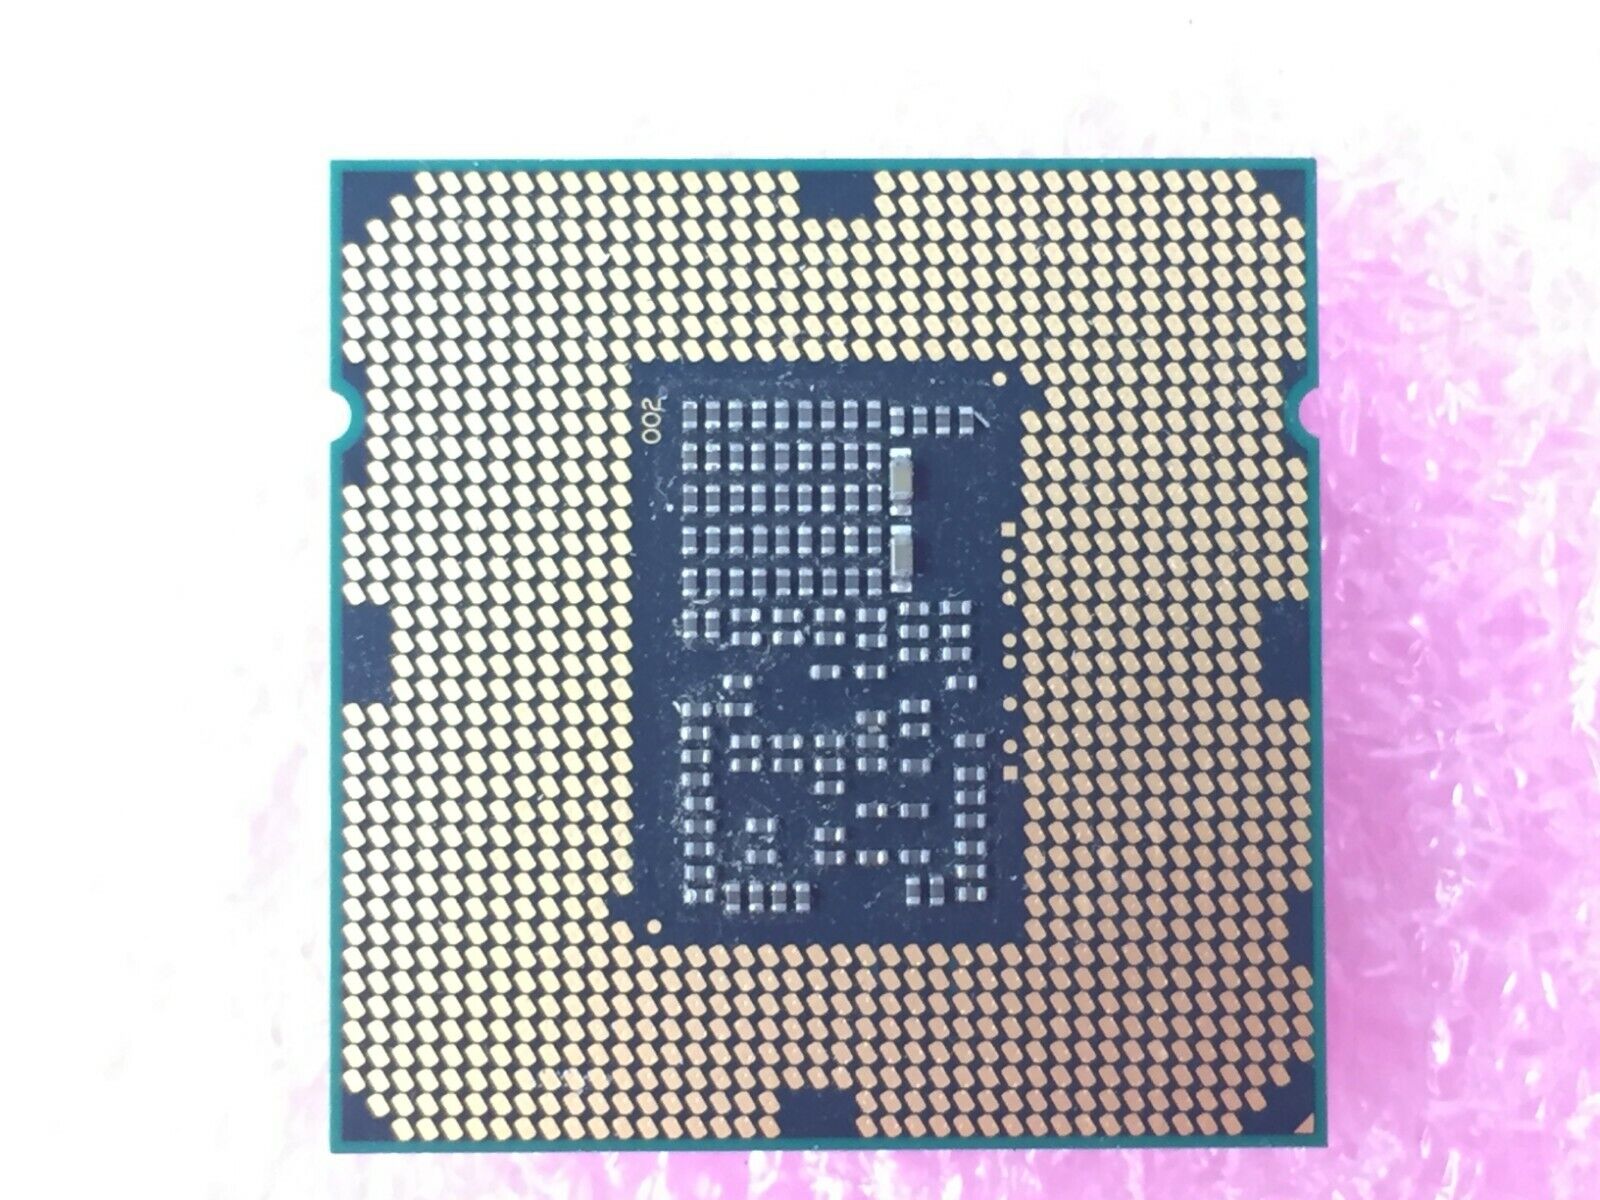 Intel Core i3-530  SLBLR 2.93GHz Dual Core LGA1156 CPU Processor